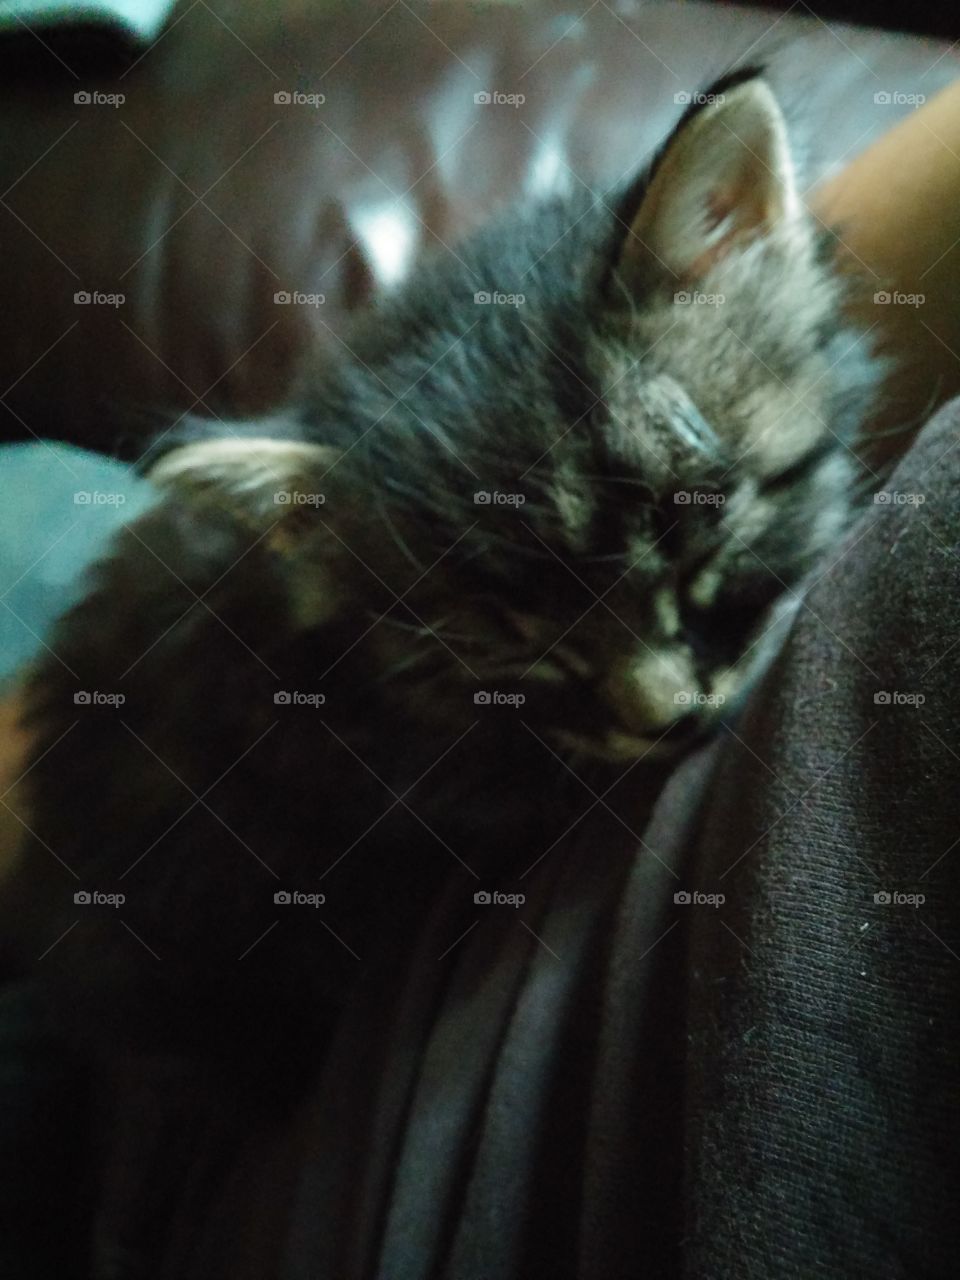 Frank. New kitty